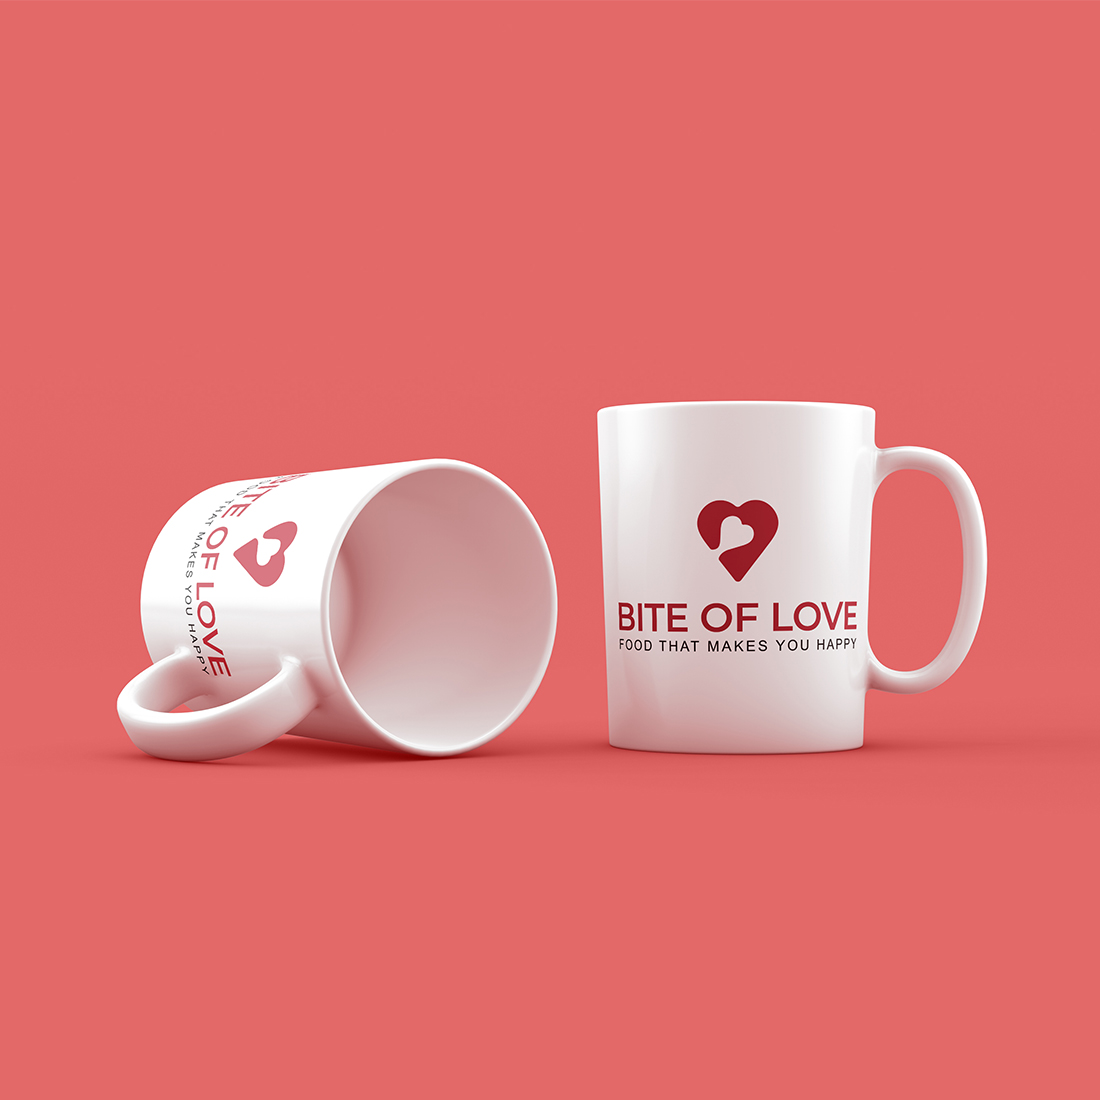 Bite Of Love - Logo Design cover image.